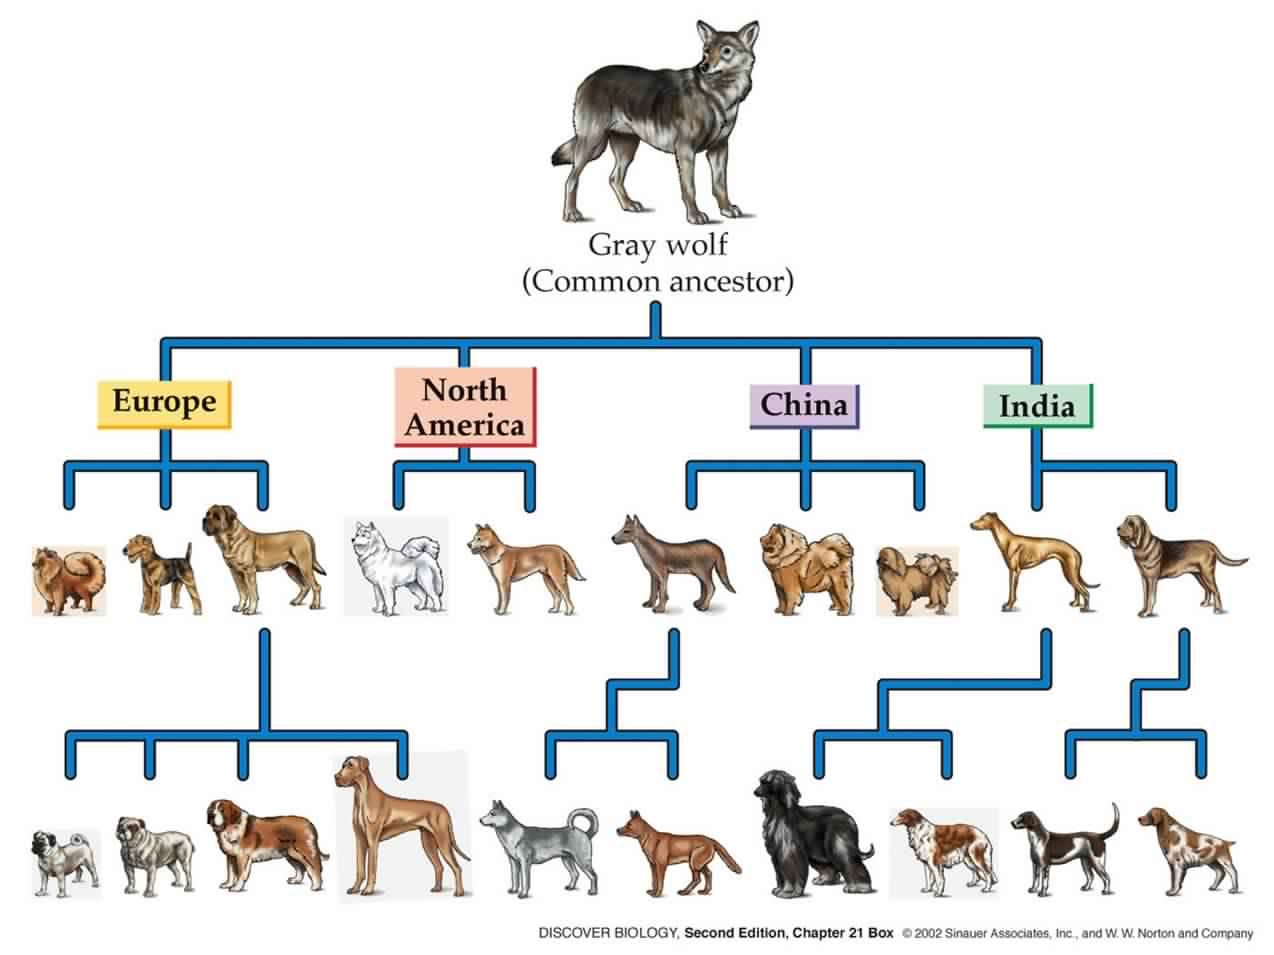 Were dogs originally pets?